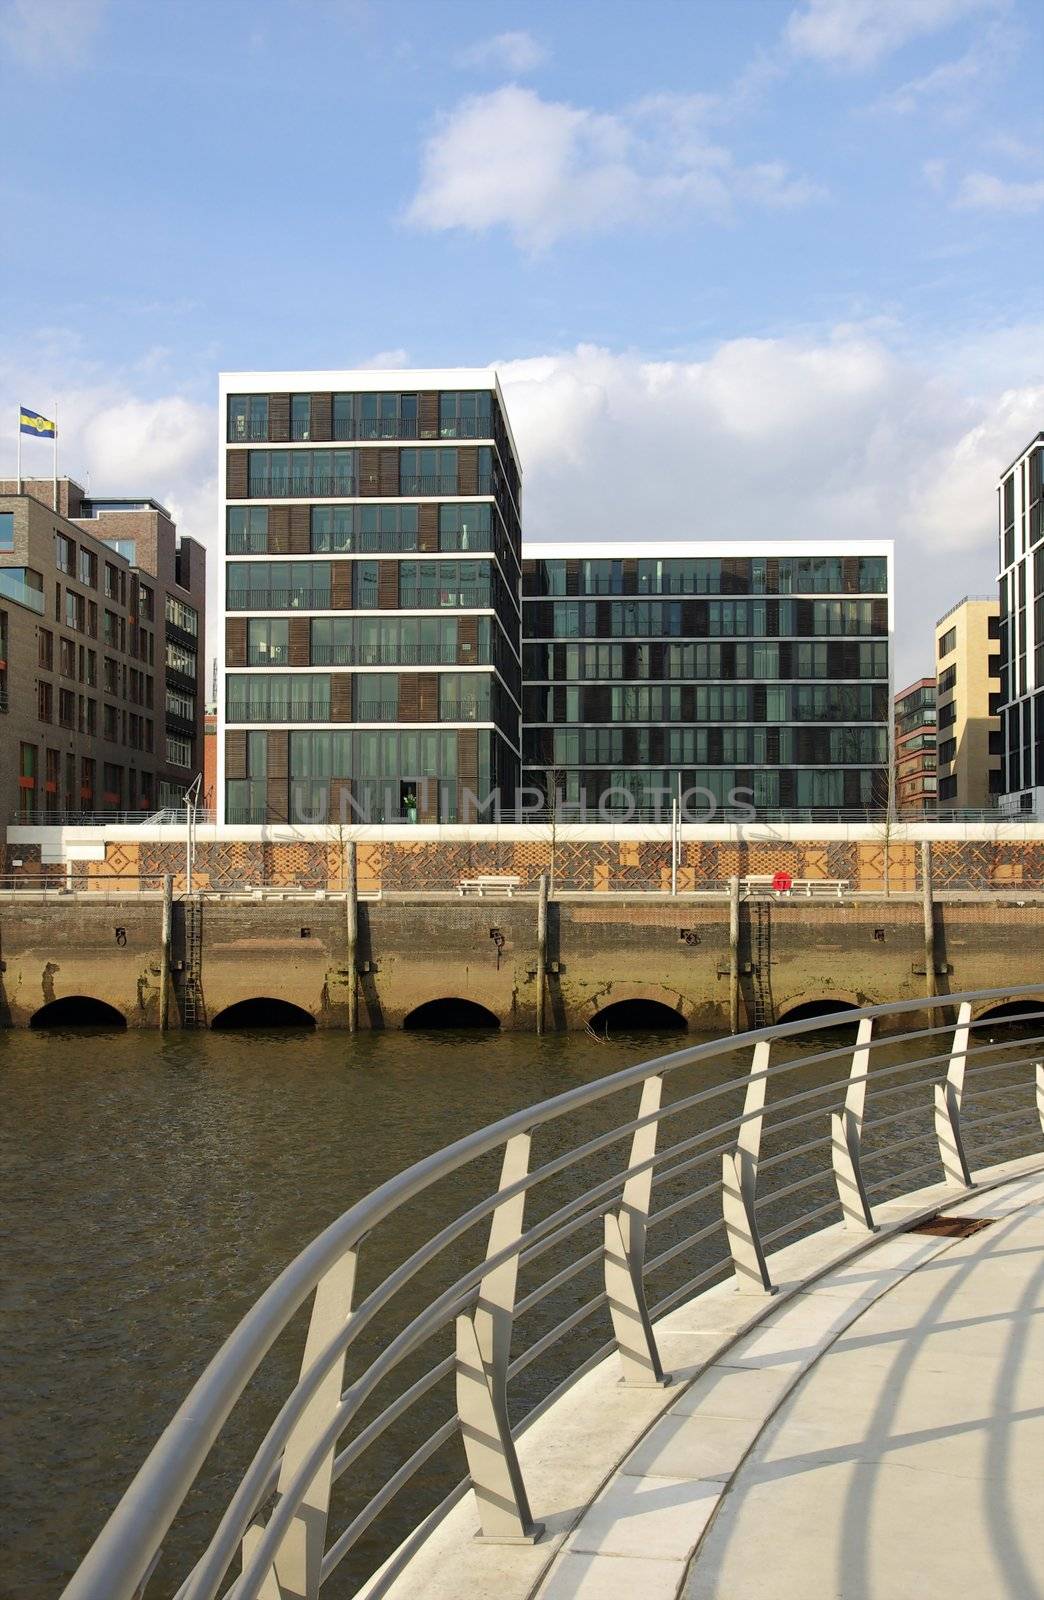 HafenCity Architektur4 by FotoFrank